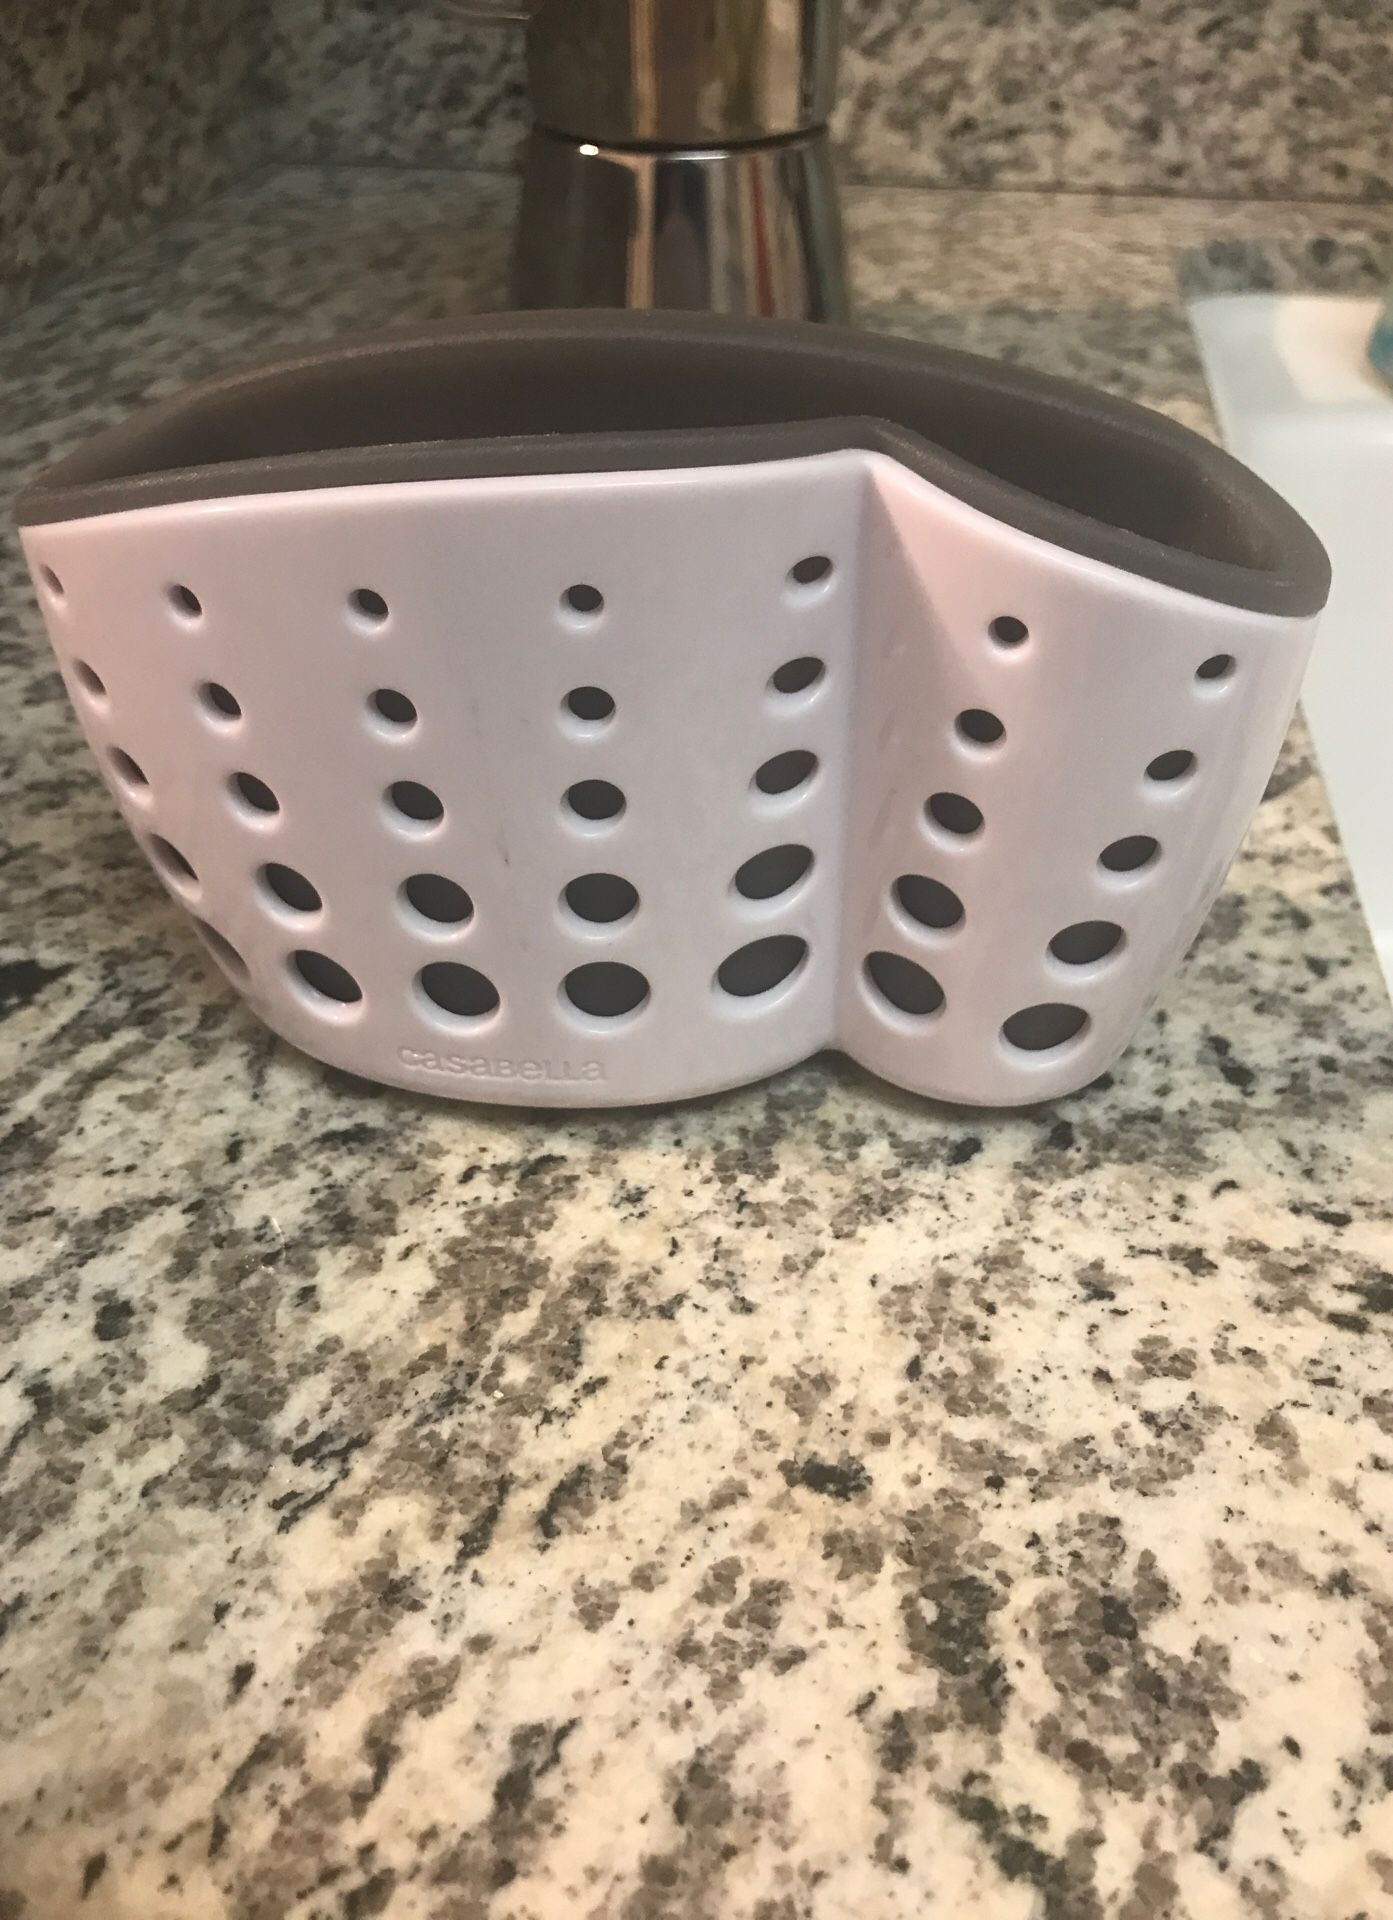 Kitchen Sink Suction Cup sponge holder